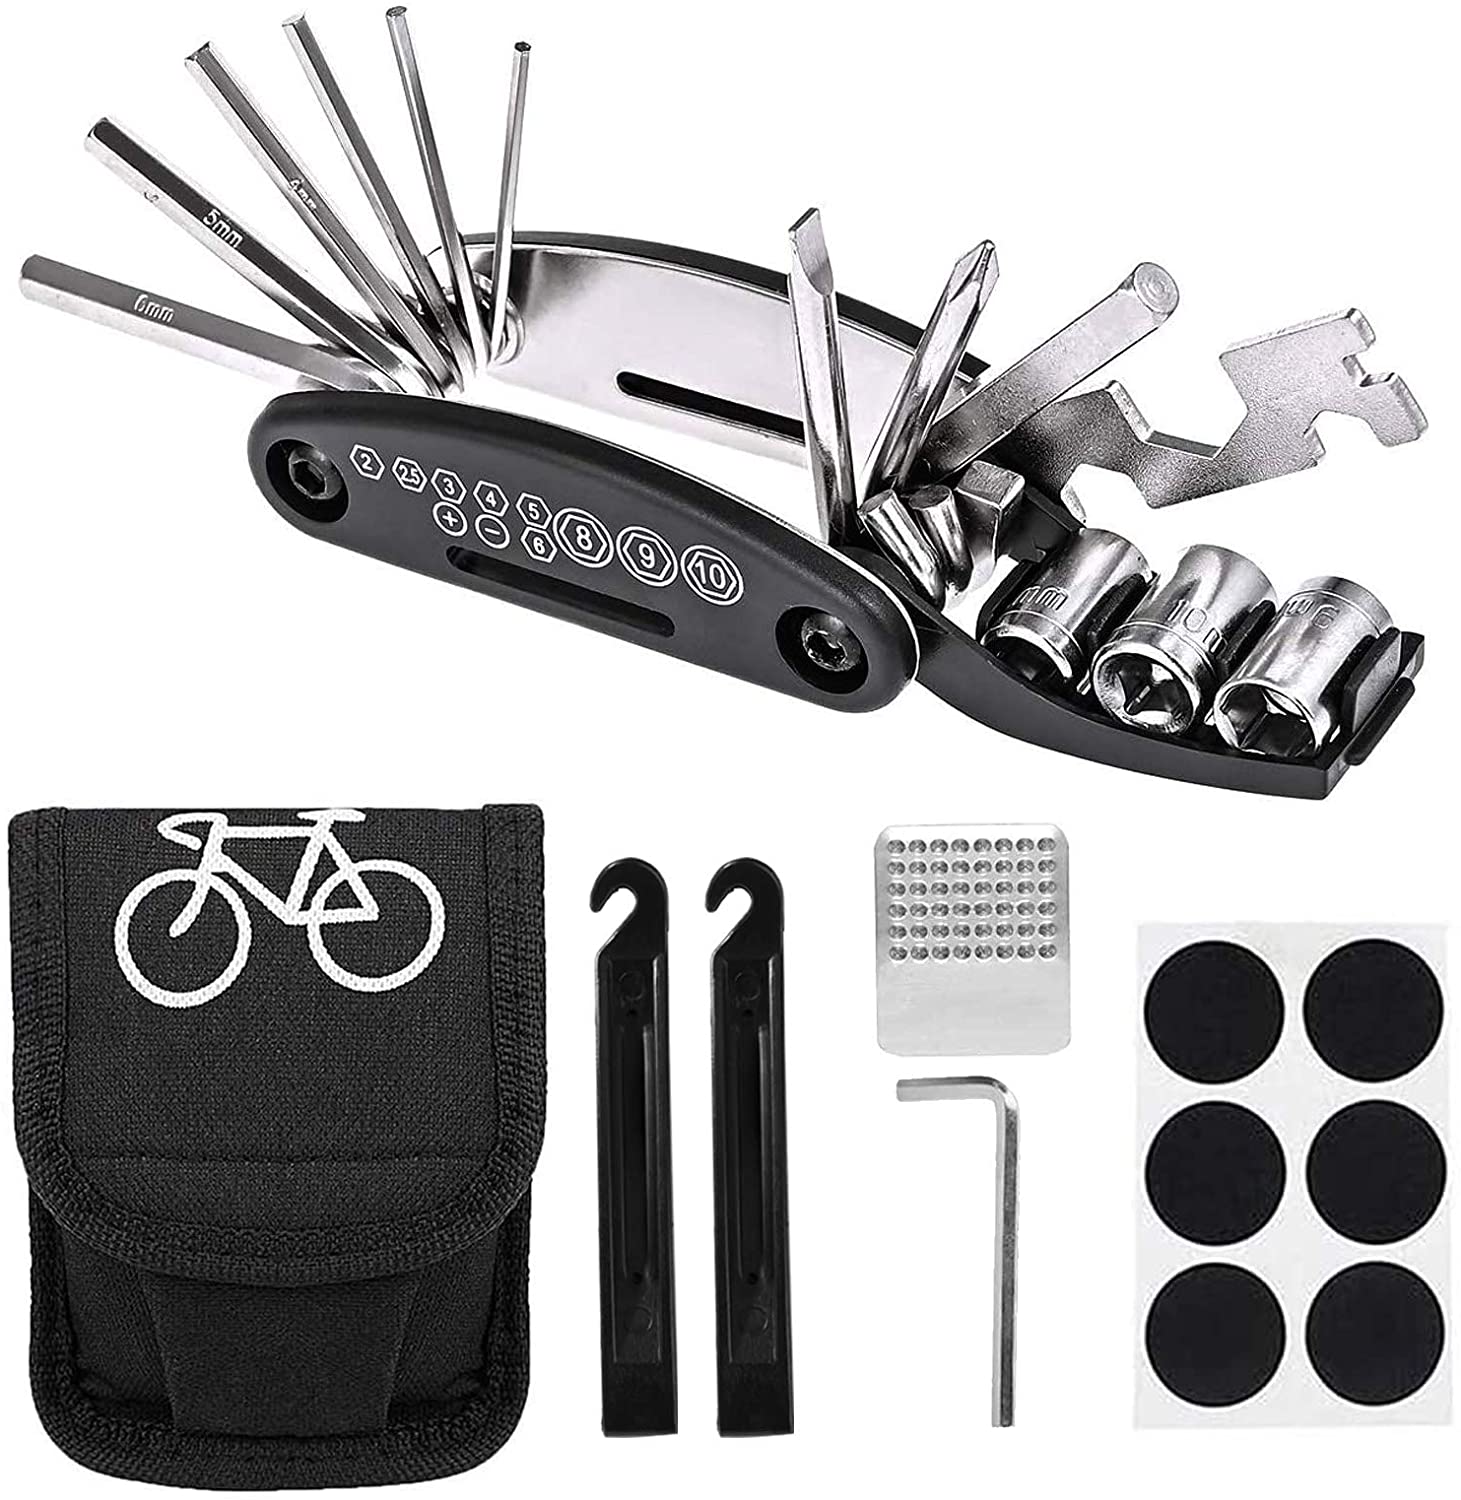 Do-it-All Bike Tool Kit